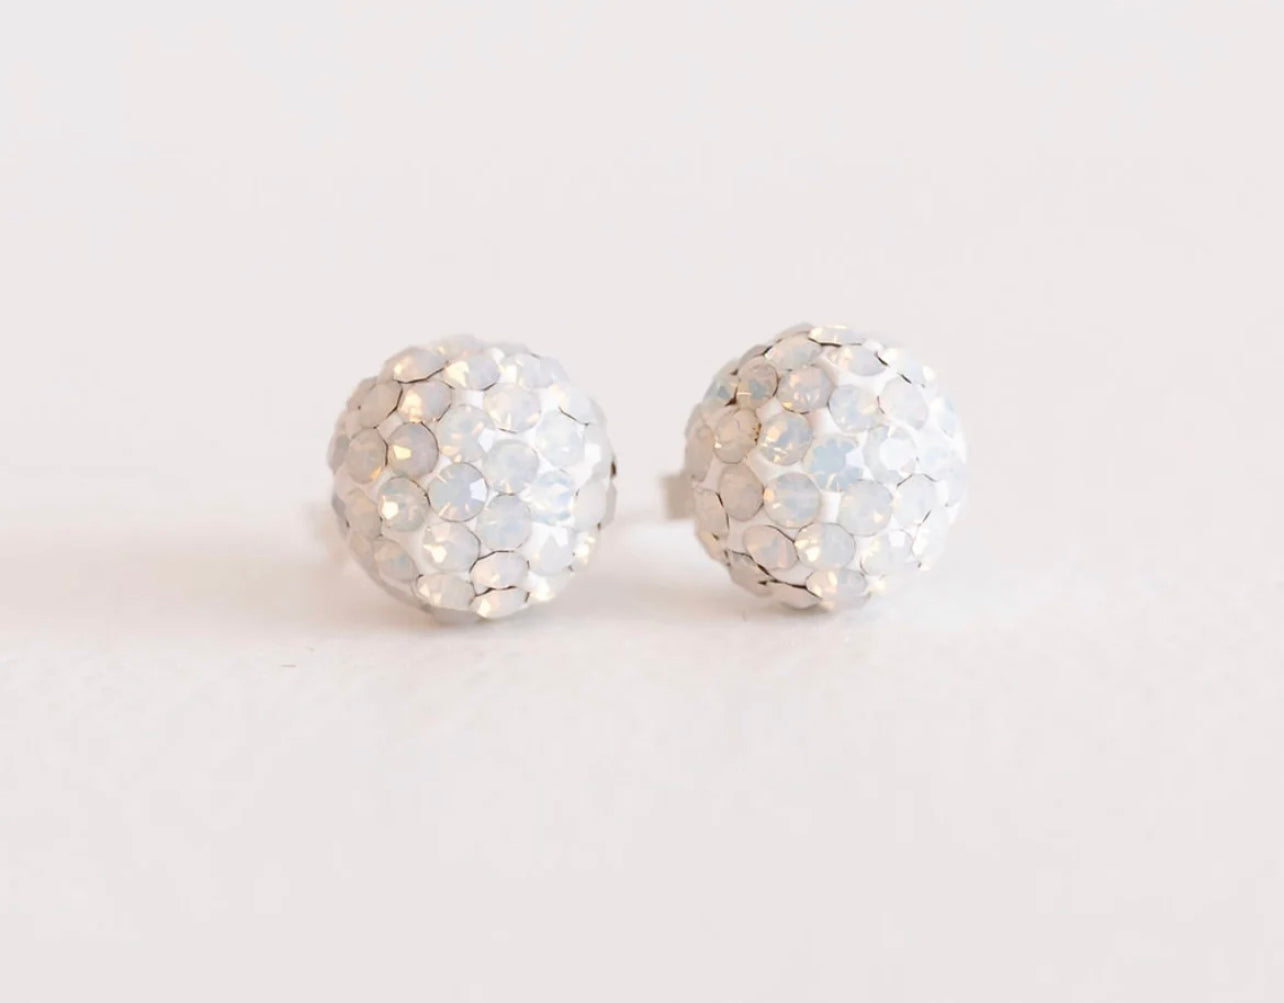 Crystal Ball Earrings - White Opal 10mm